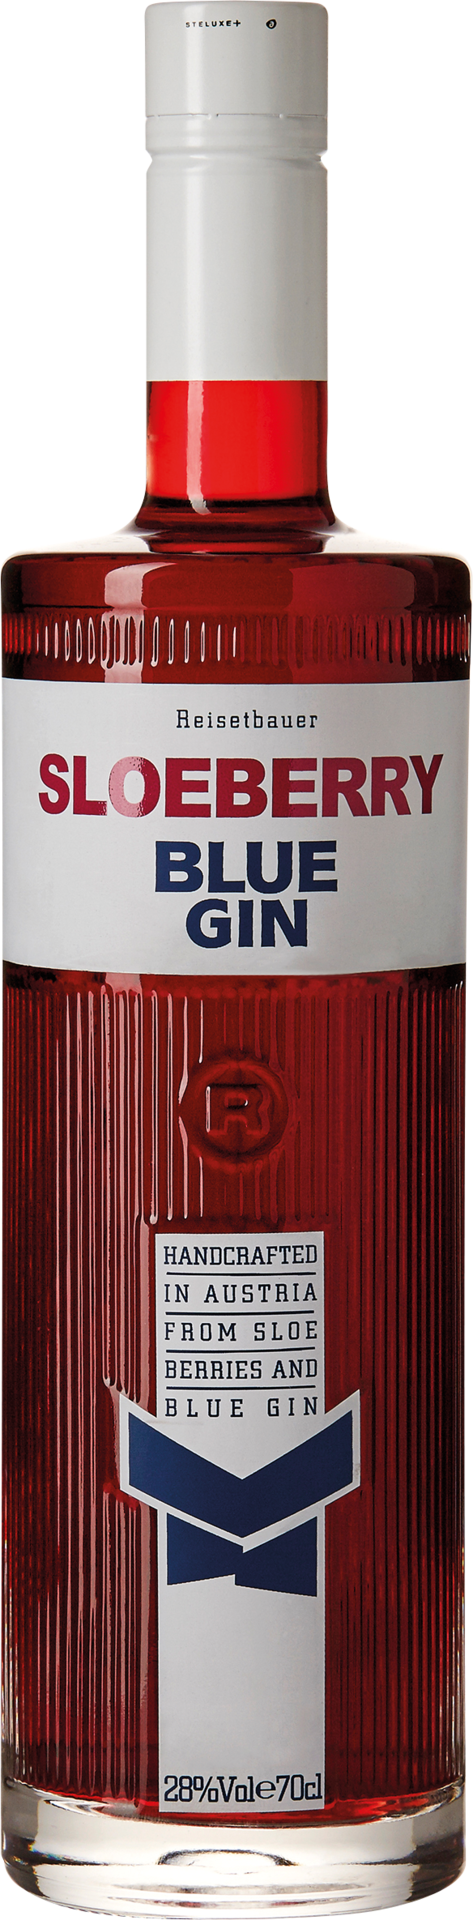 Reisetbauer Sloeberry BLUE GIN